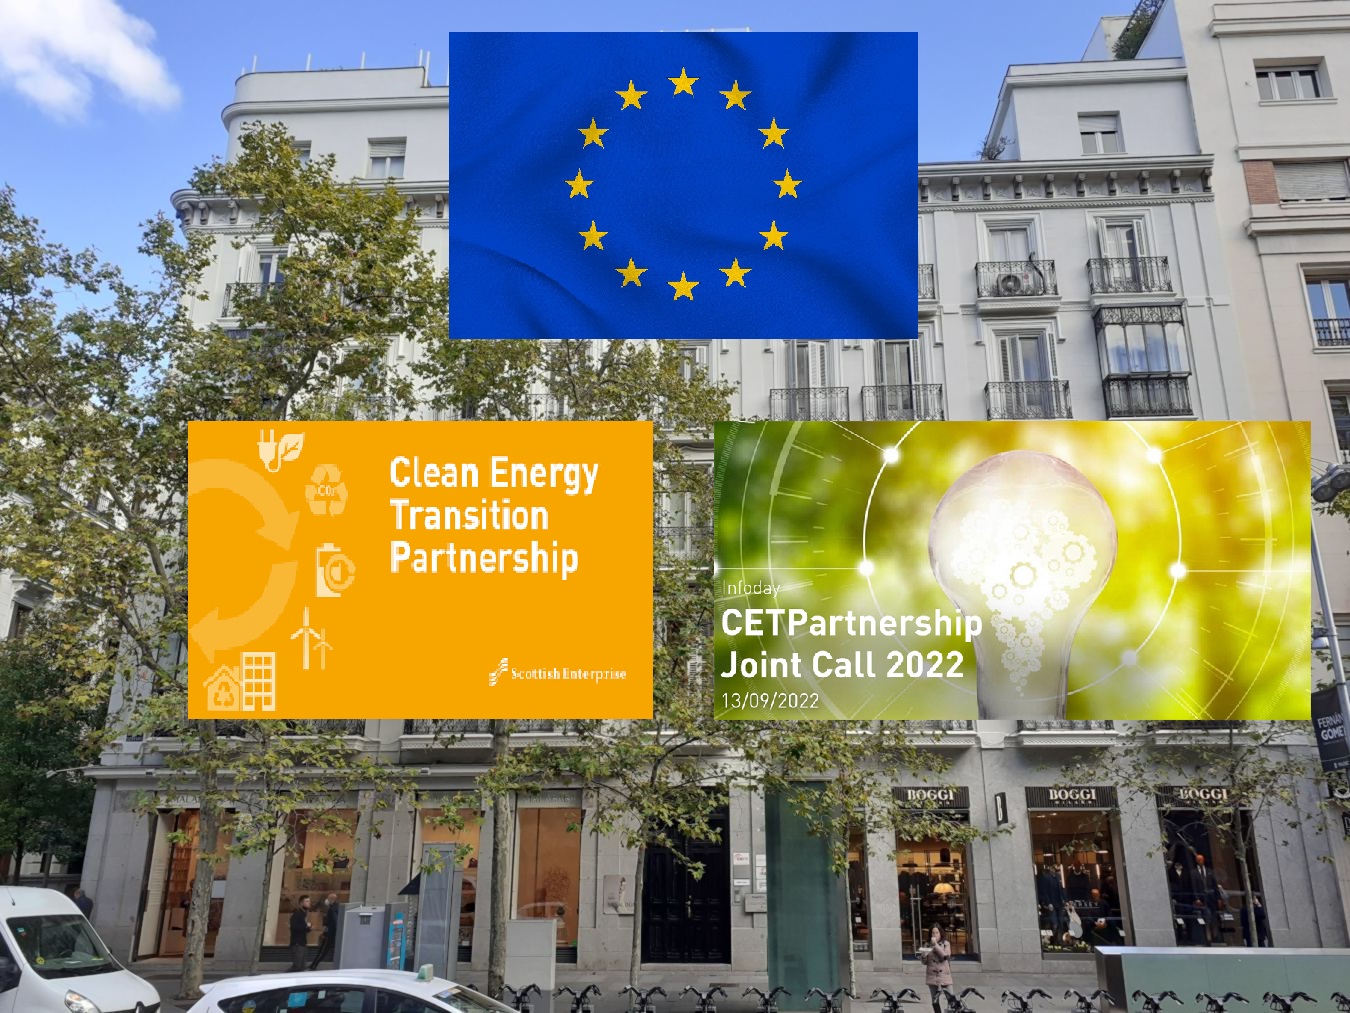 Abogados Lopez Ibor fondos europeos energias renovables